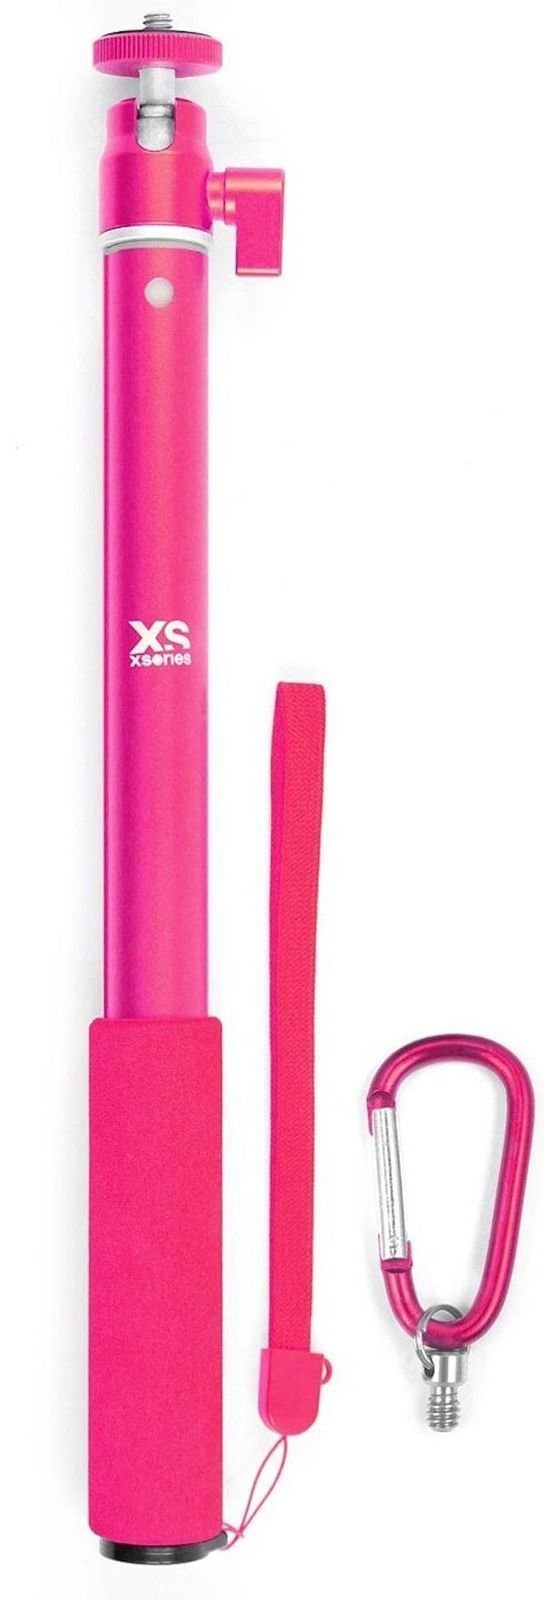 GoPro Accessories XSories Big U-Shot Pink